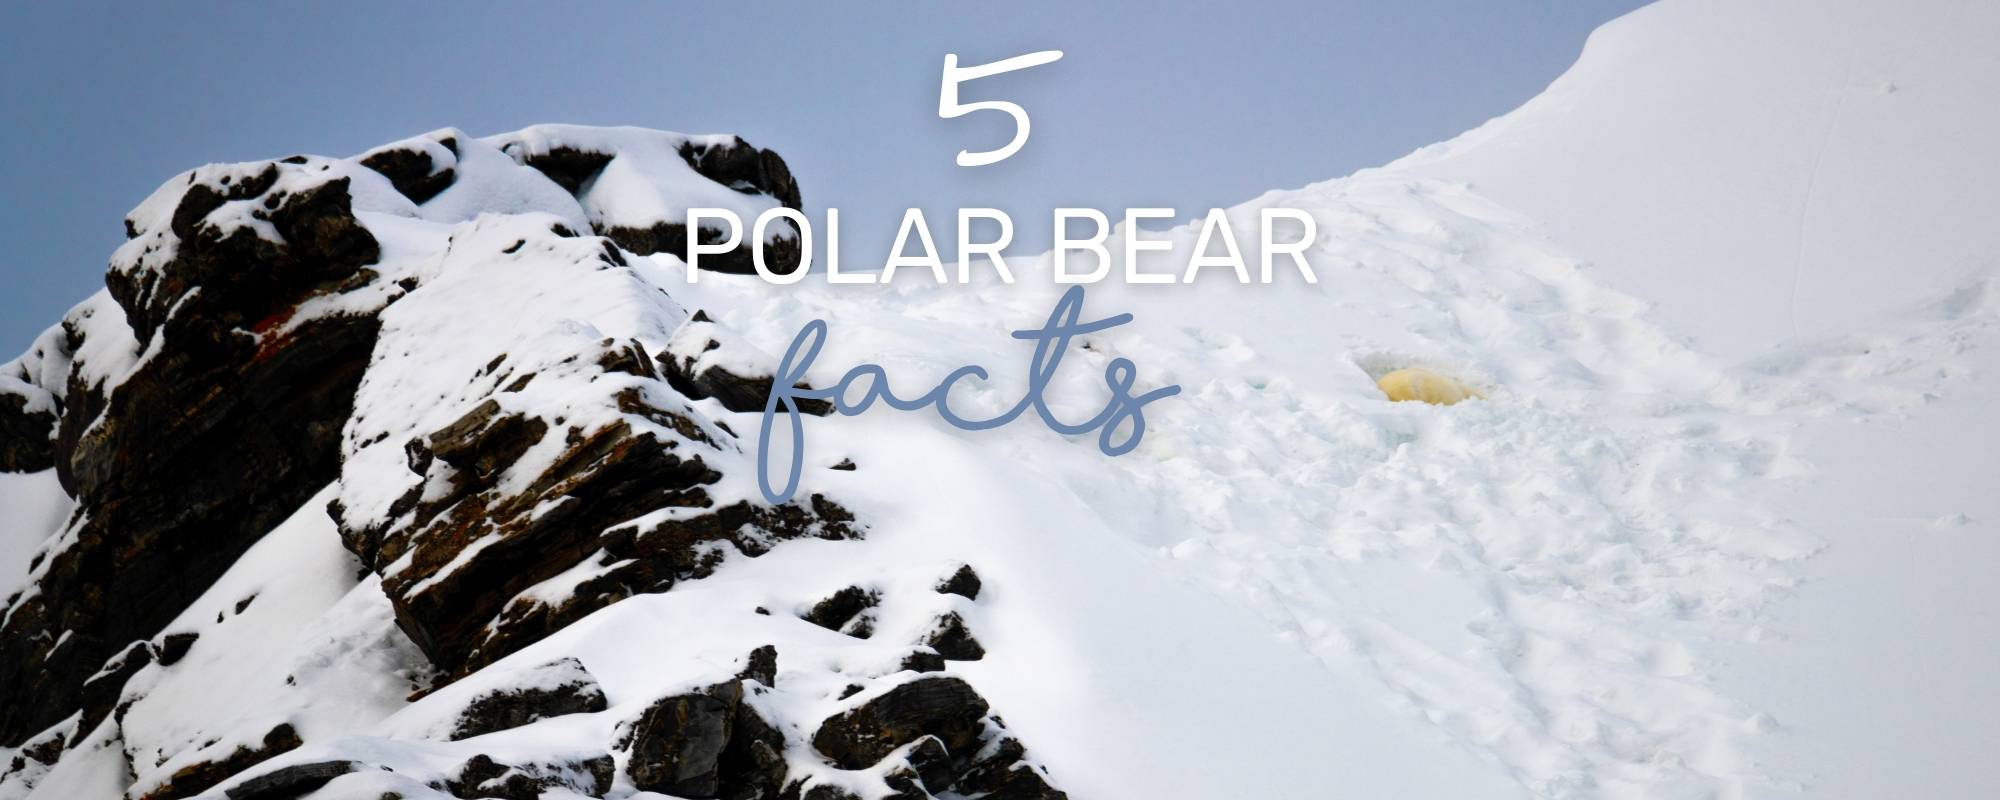 5 ICY POLAR BEAR FACTS